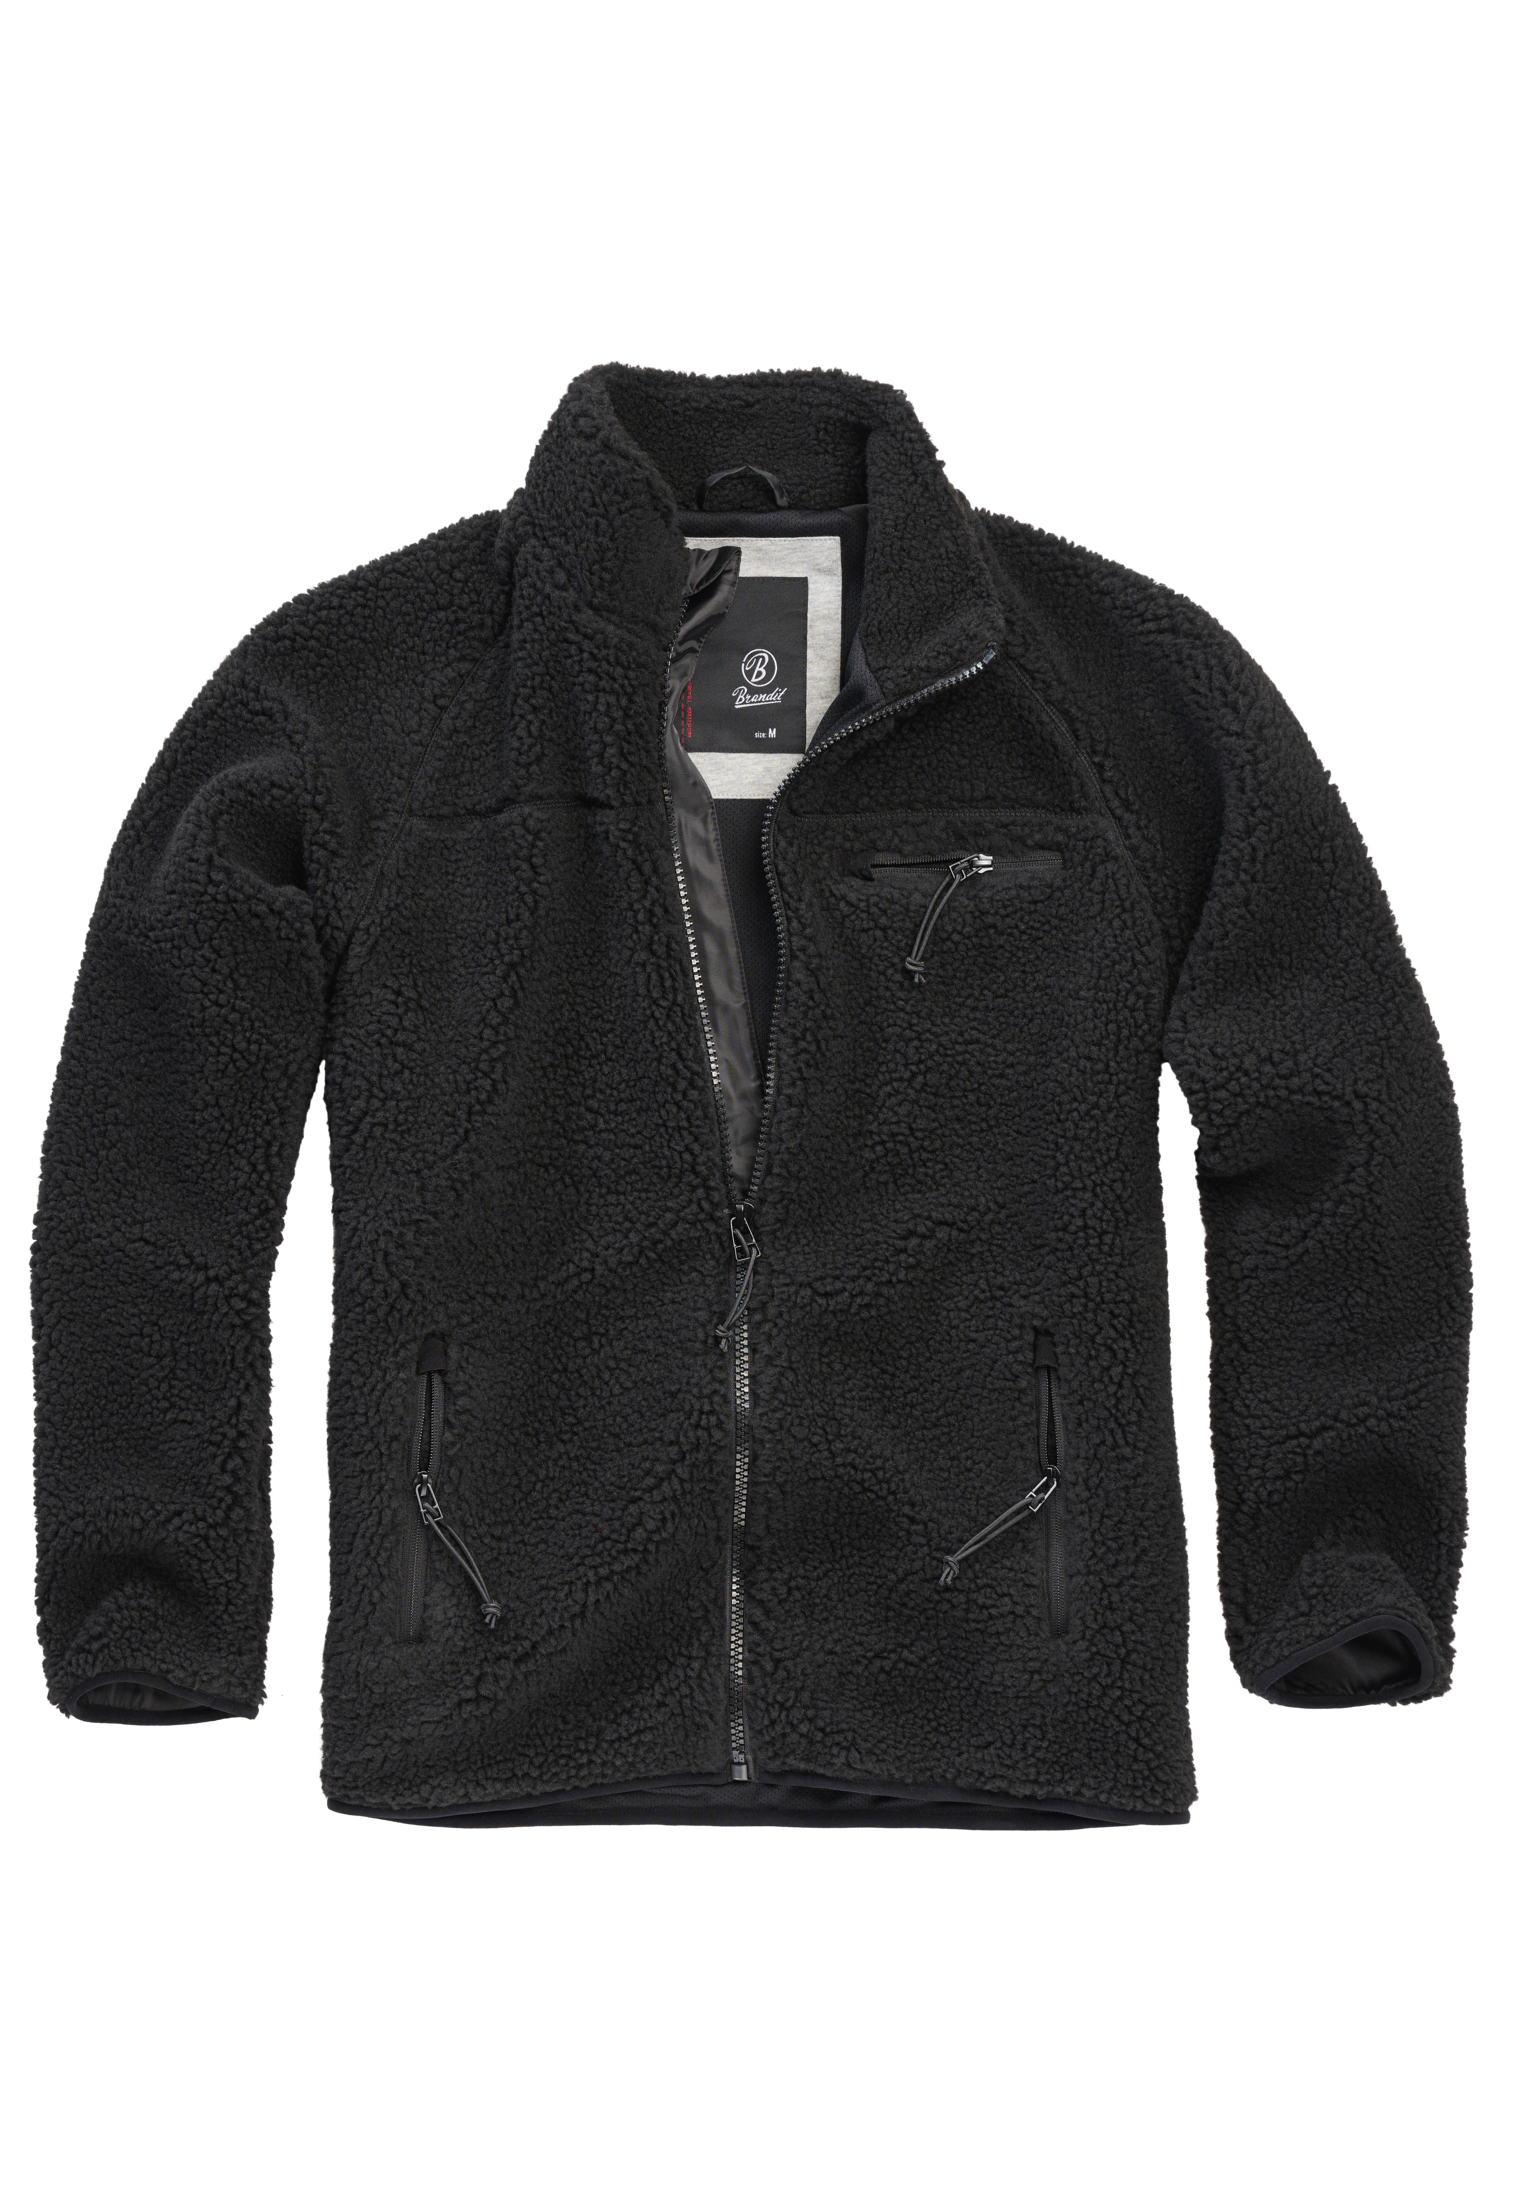 Jacken Teddyfleece Jacket in Farbe black